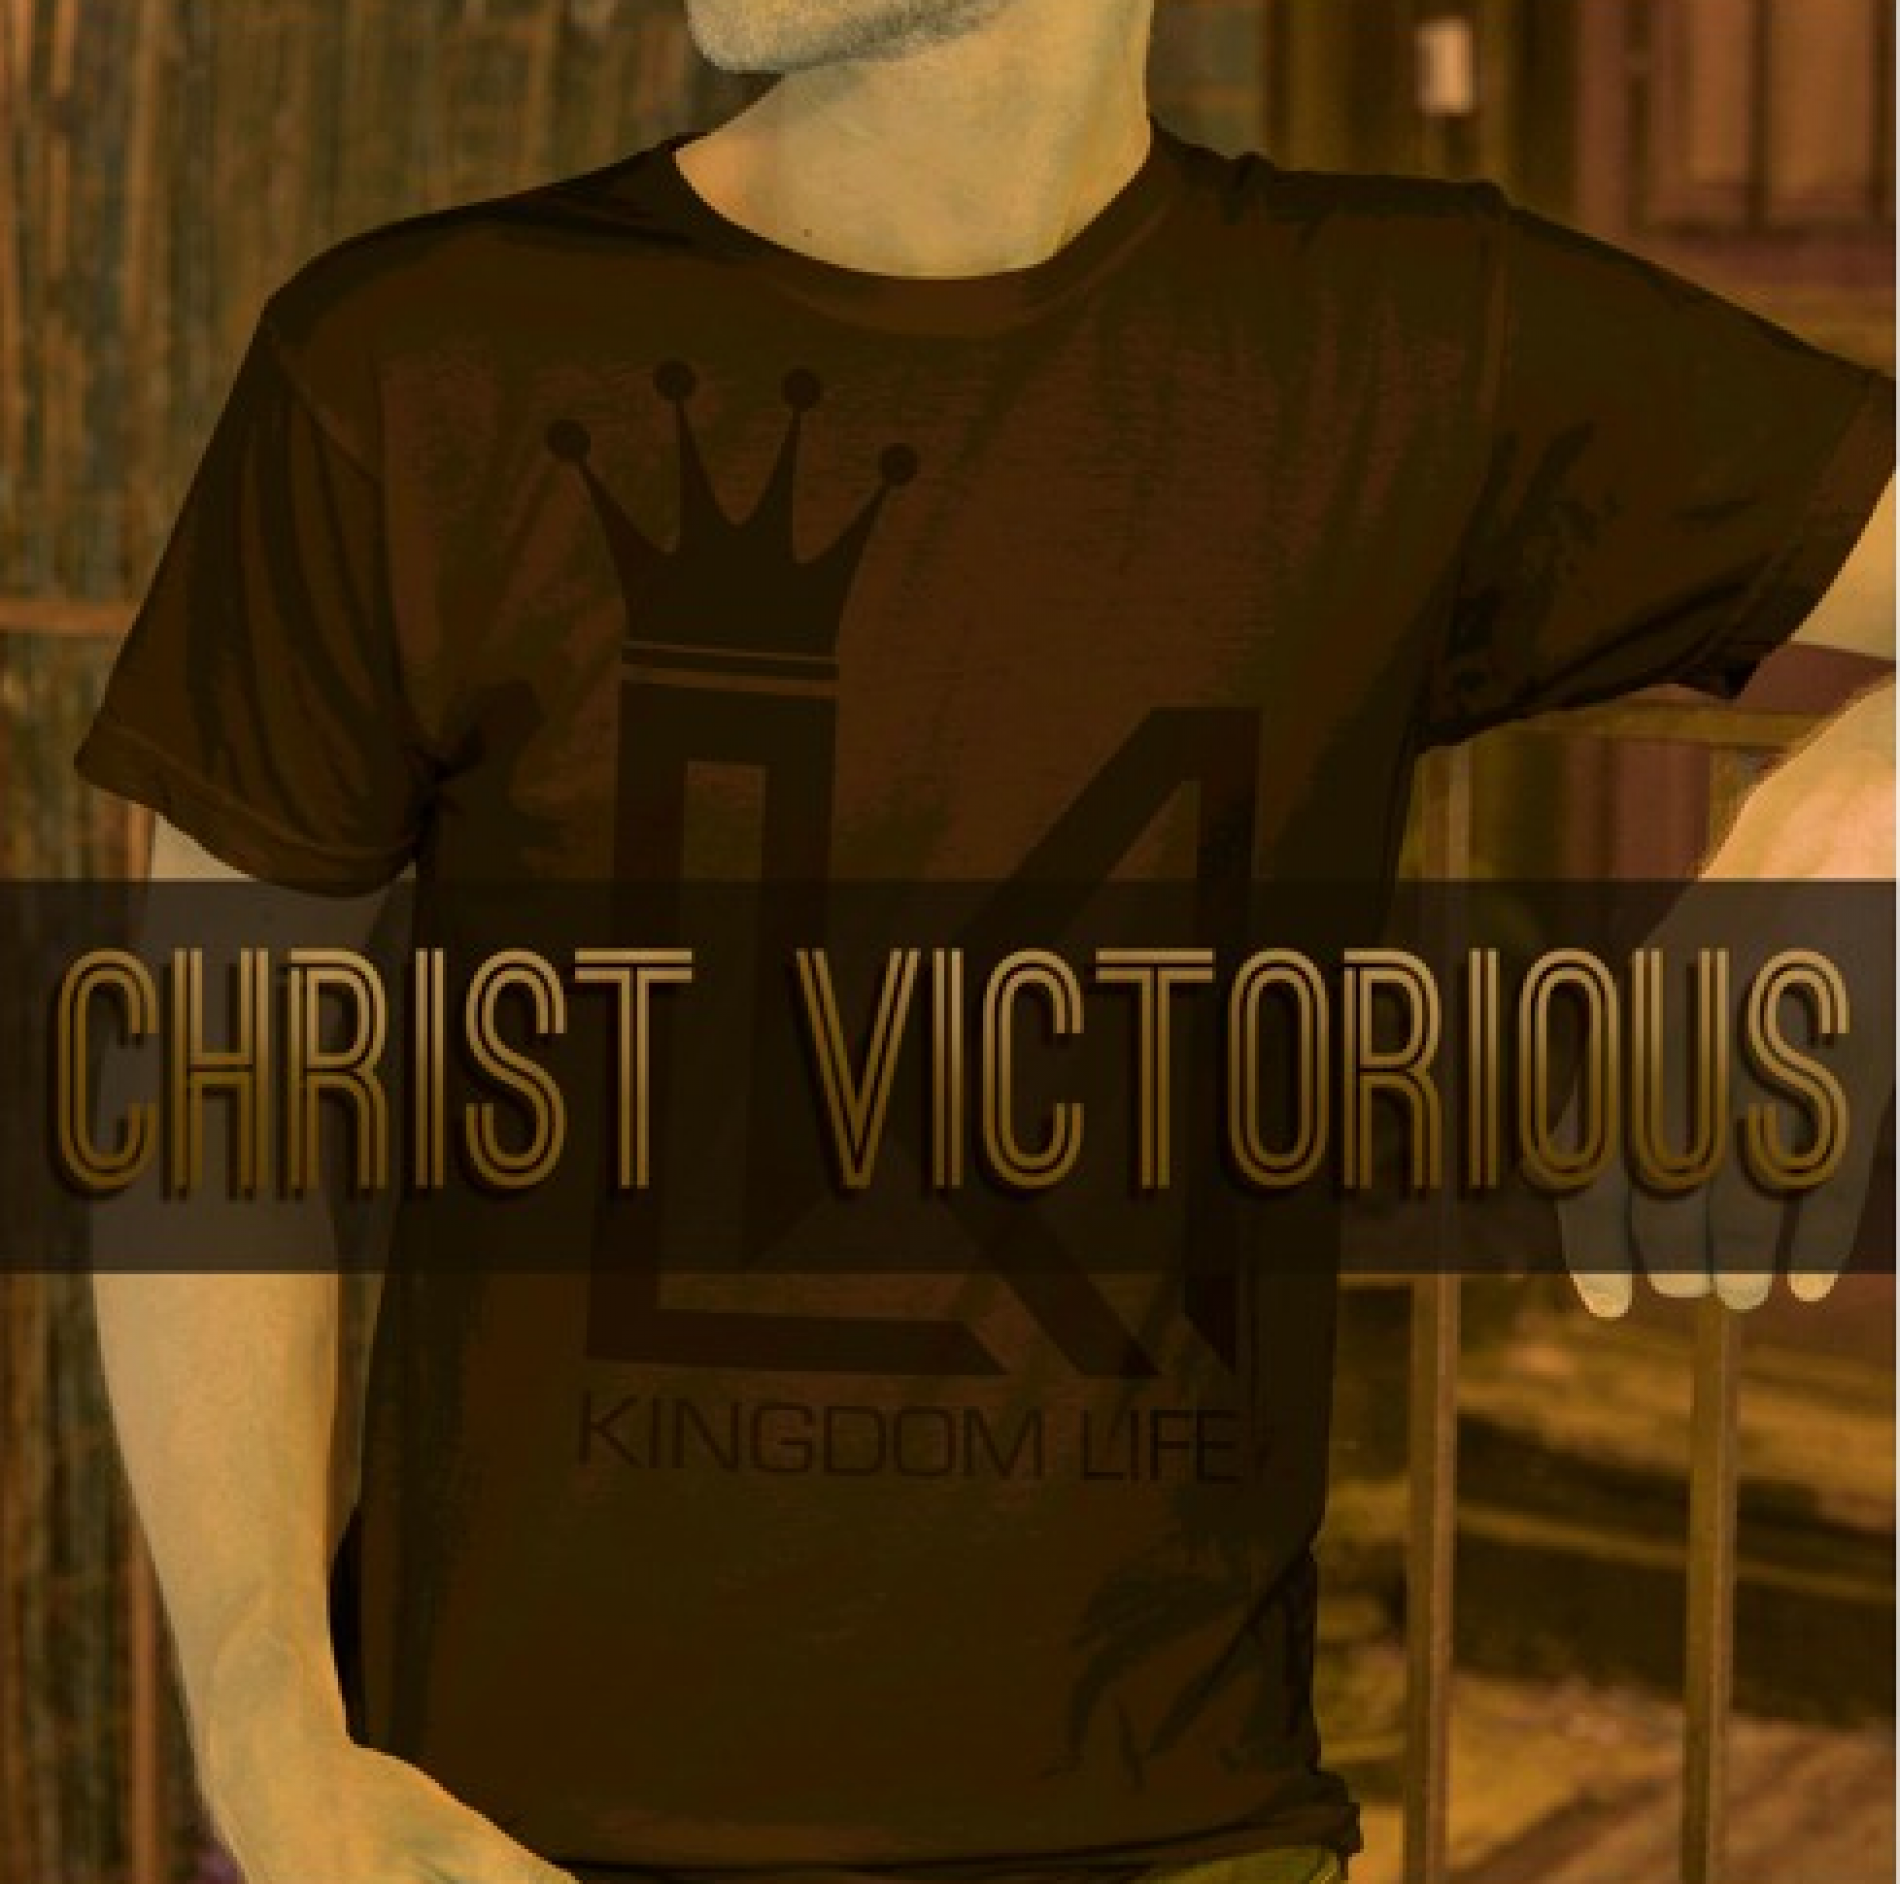 Kingdom Life – Christ Victorious